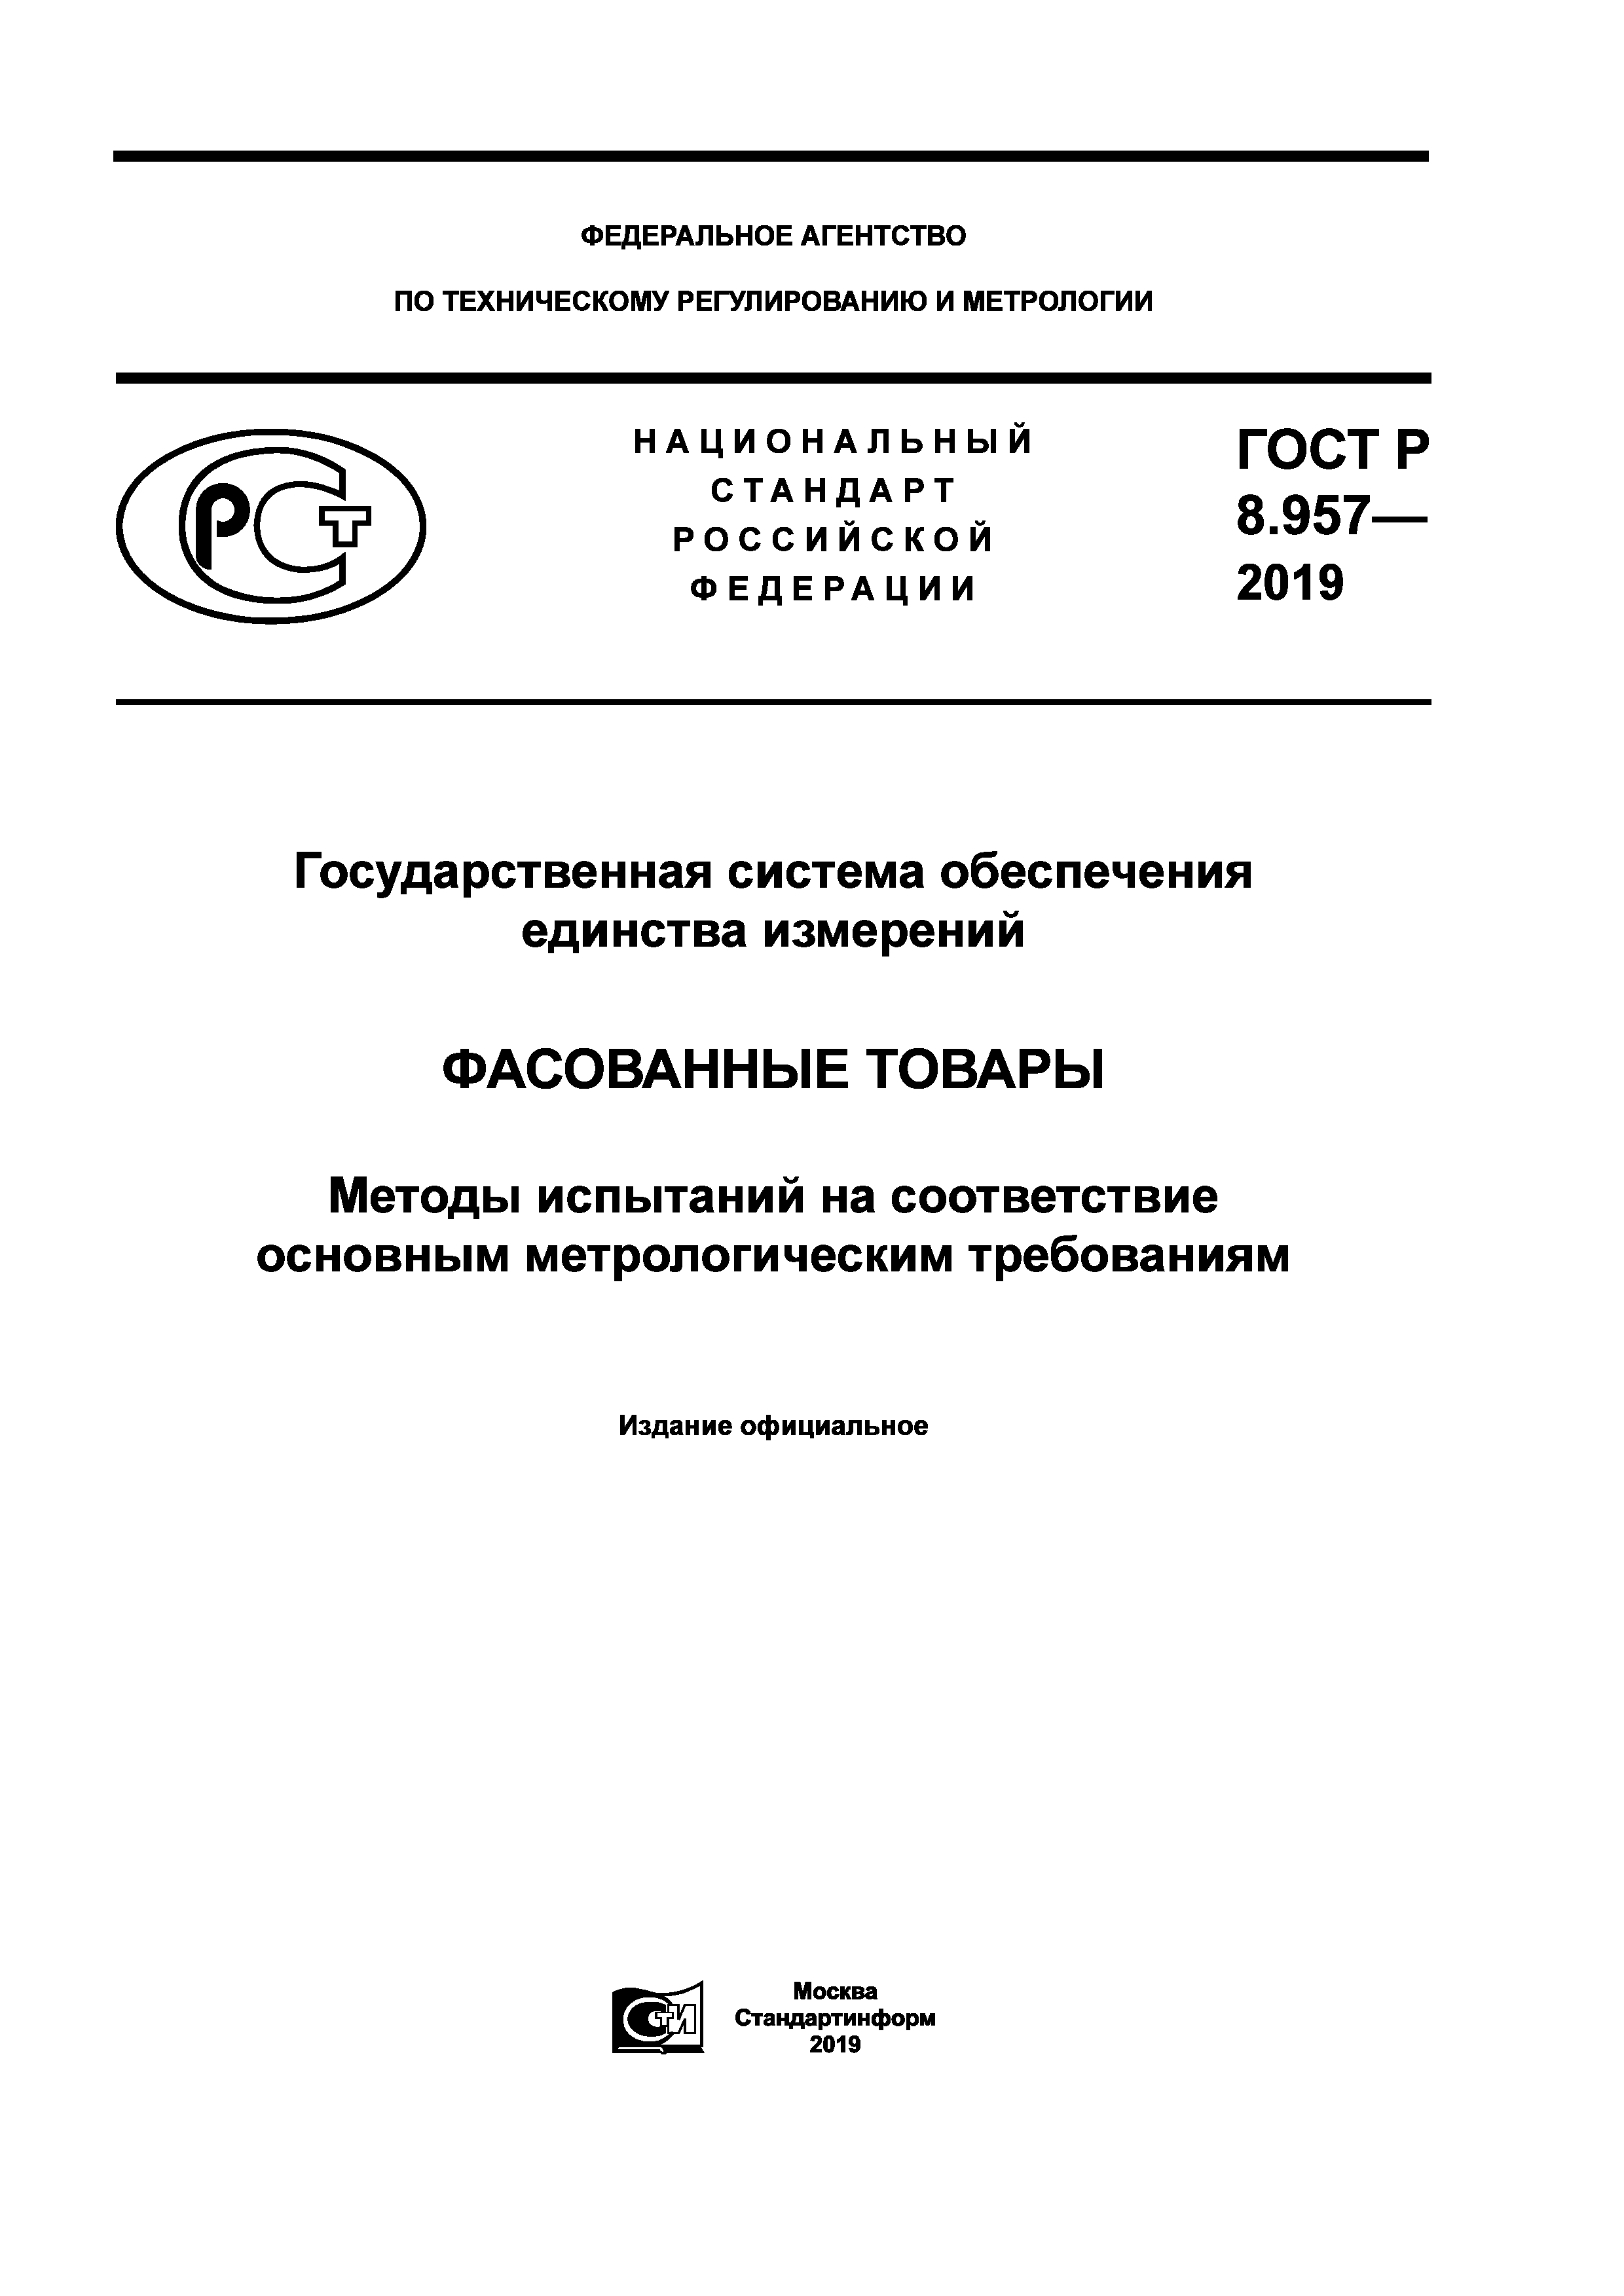 ГОСТ Р 8.957-2019